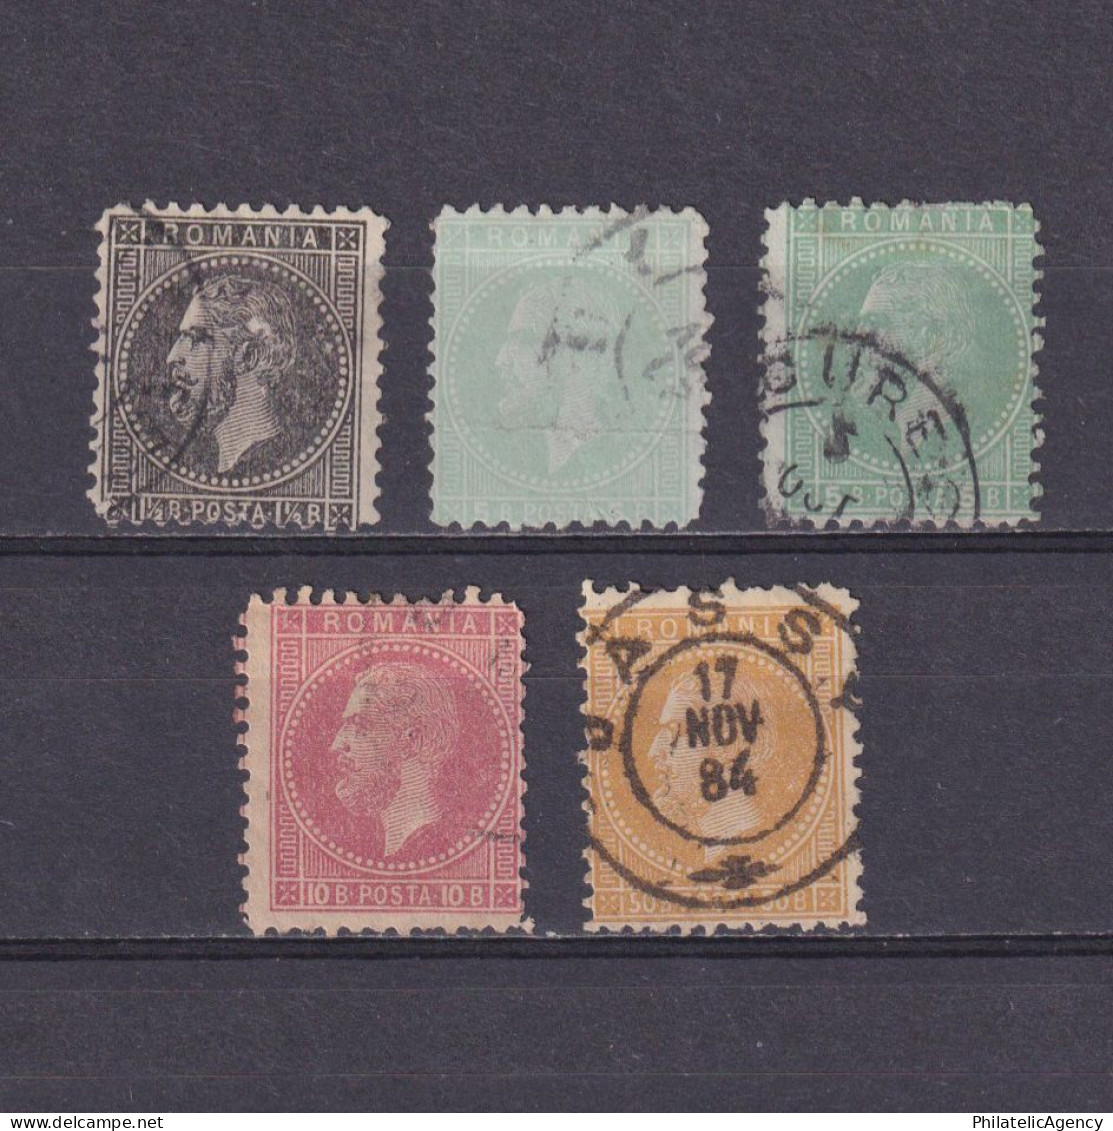 ROMANIA 1879, Sc# 66-72, CV $50, Part Set, Prince Carol, Used - 1858-1880 Moldavia & Principality